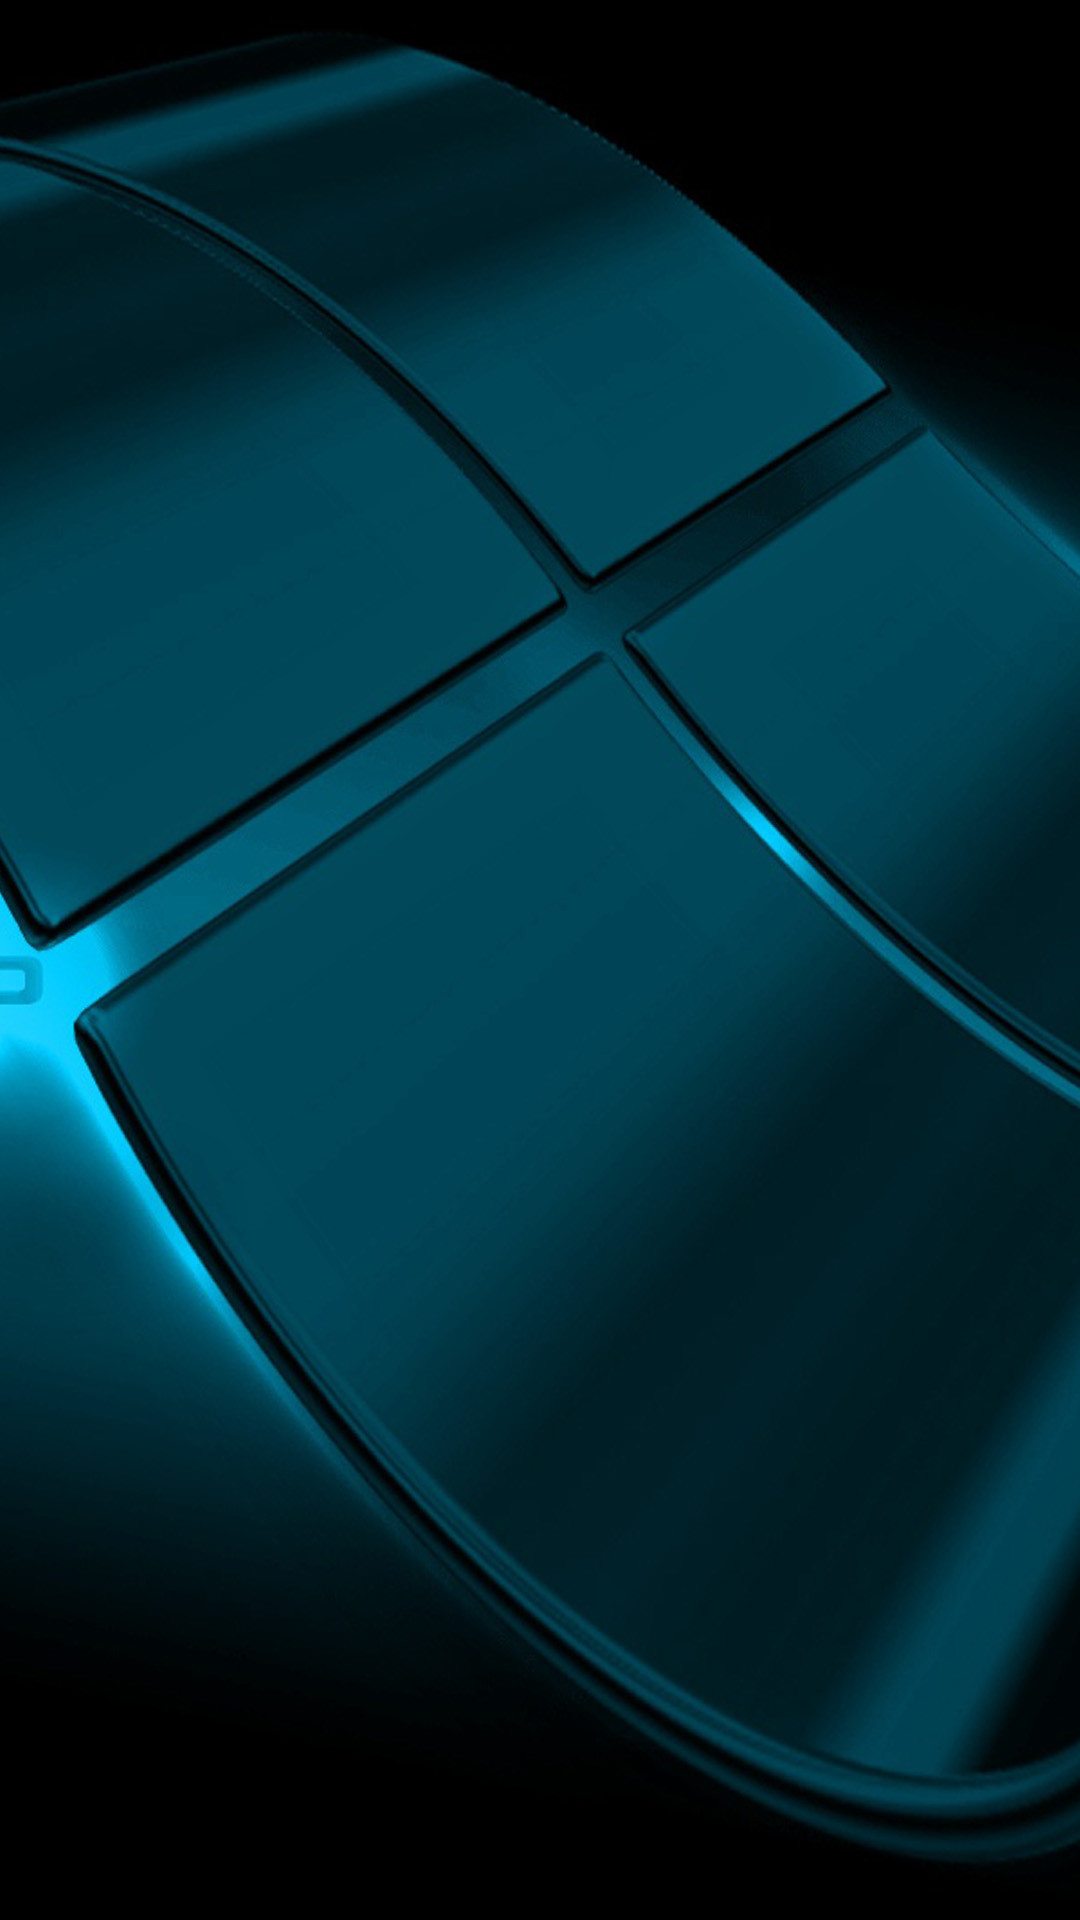 1080x1920 windows xp blue illusion Galaxy s5 Wallpaper